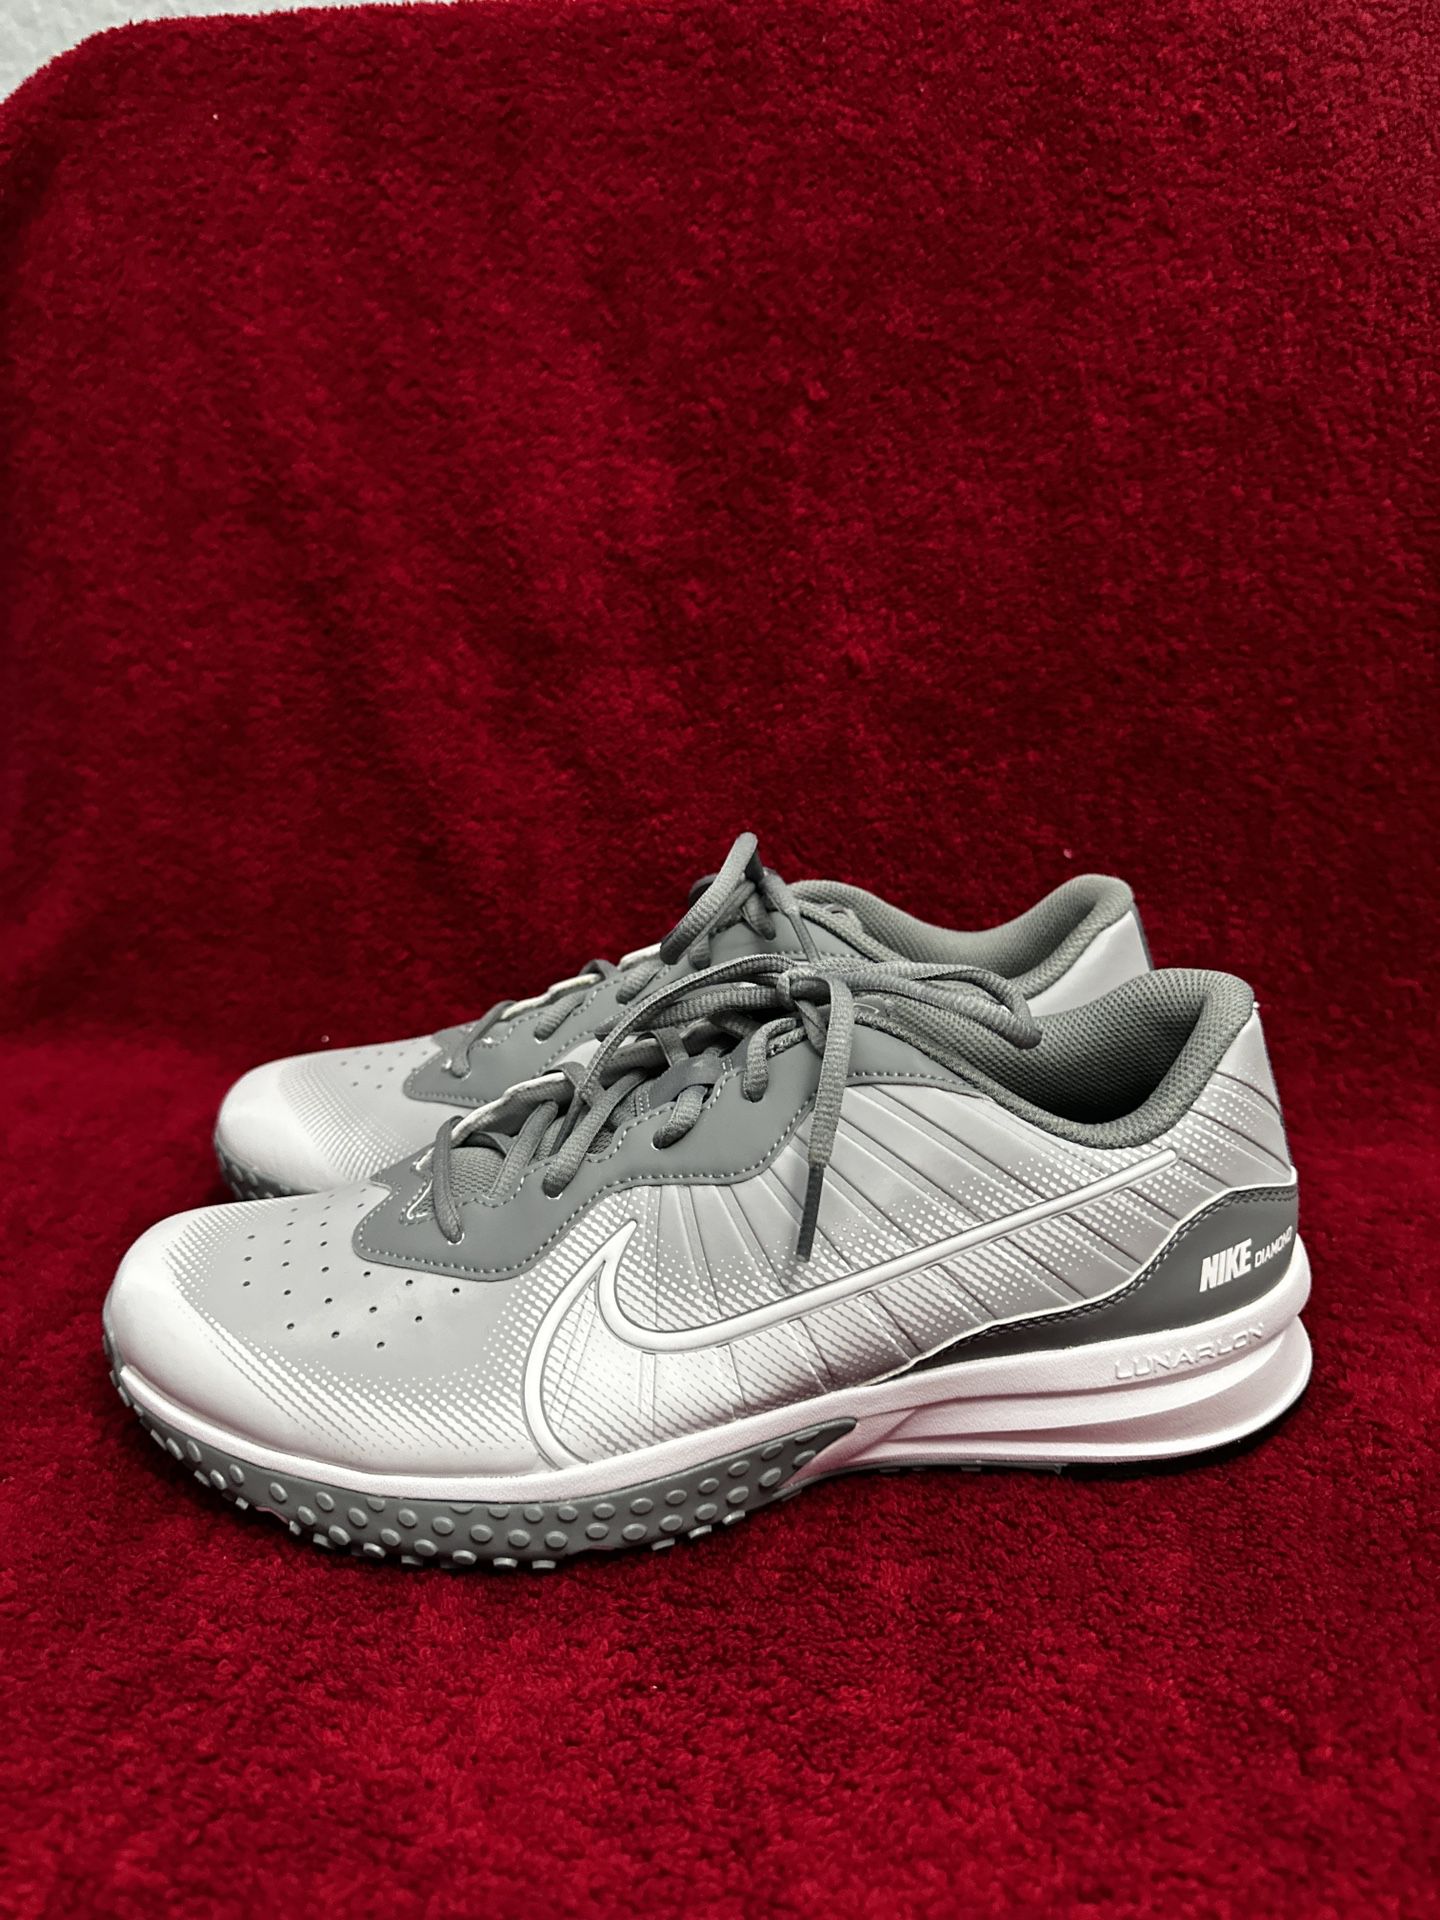 Nike Alpha Huarache Varsity 4 TURF Baseball Shoes Gray Mens 10.5 DJ6518-012 for Sale in San Diego, CA - OfferUp